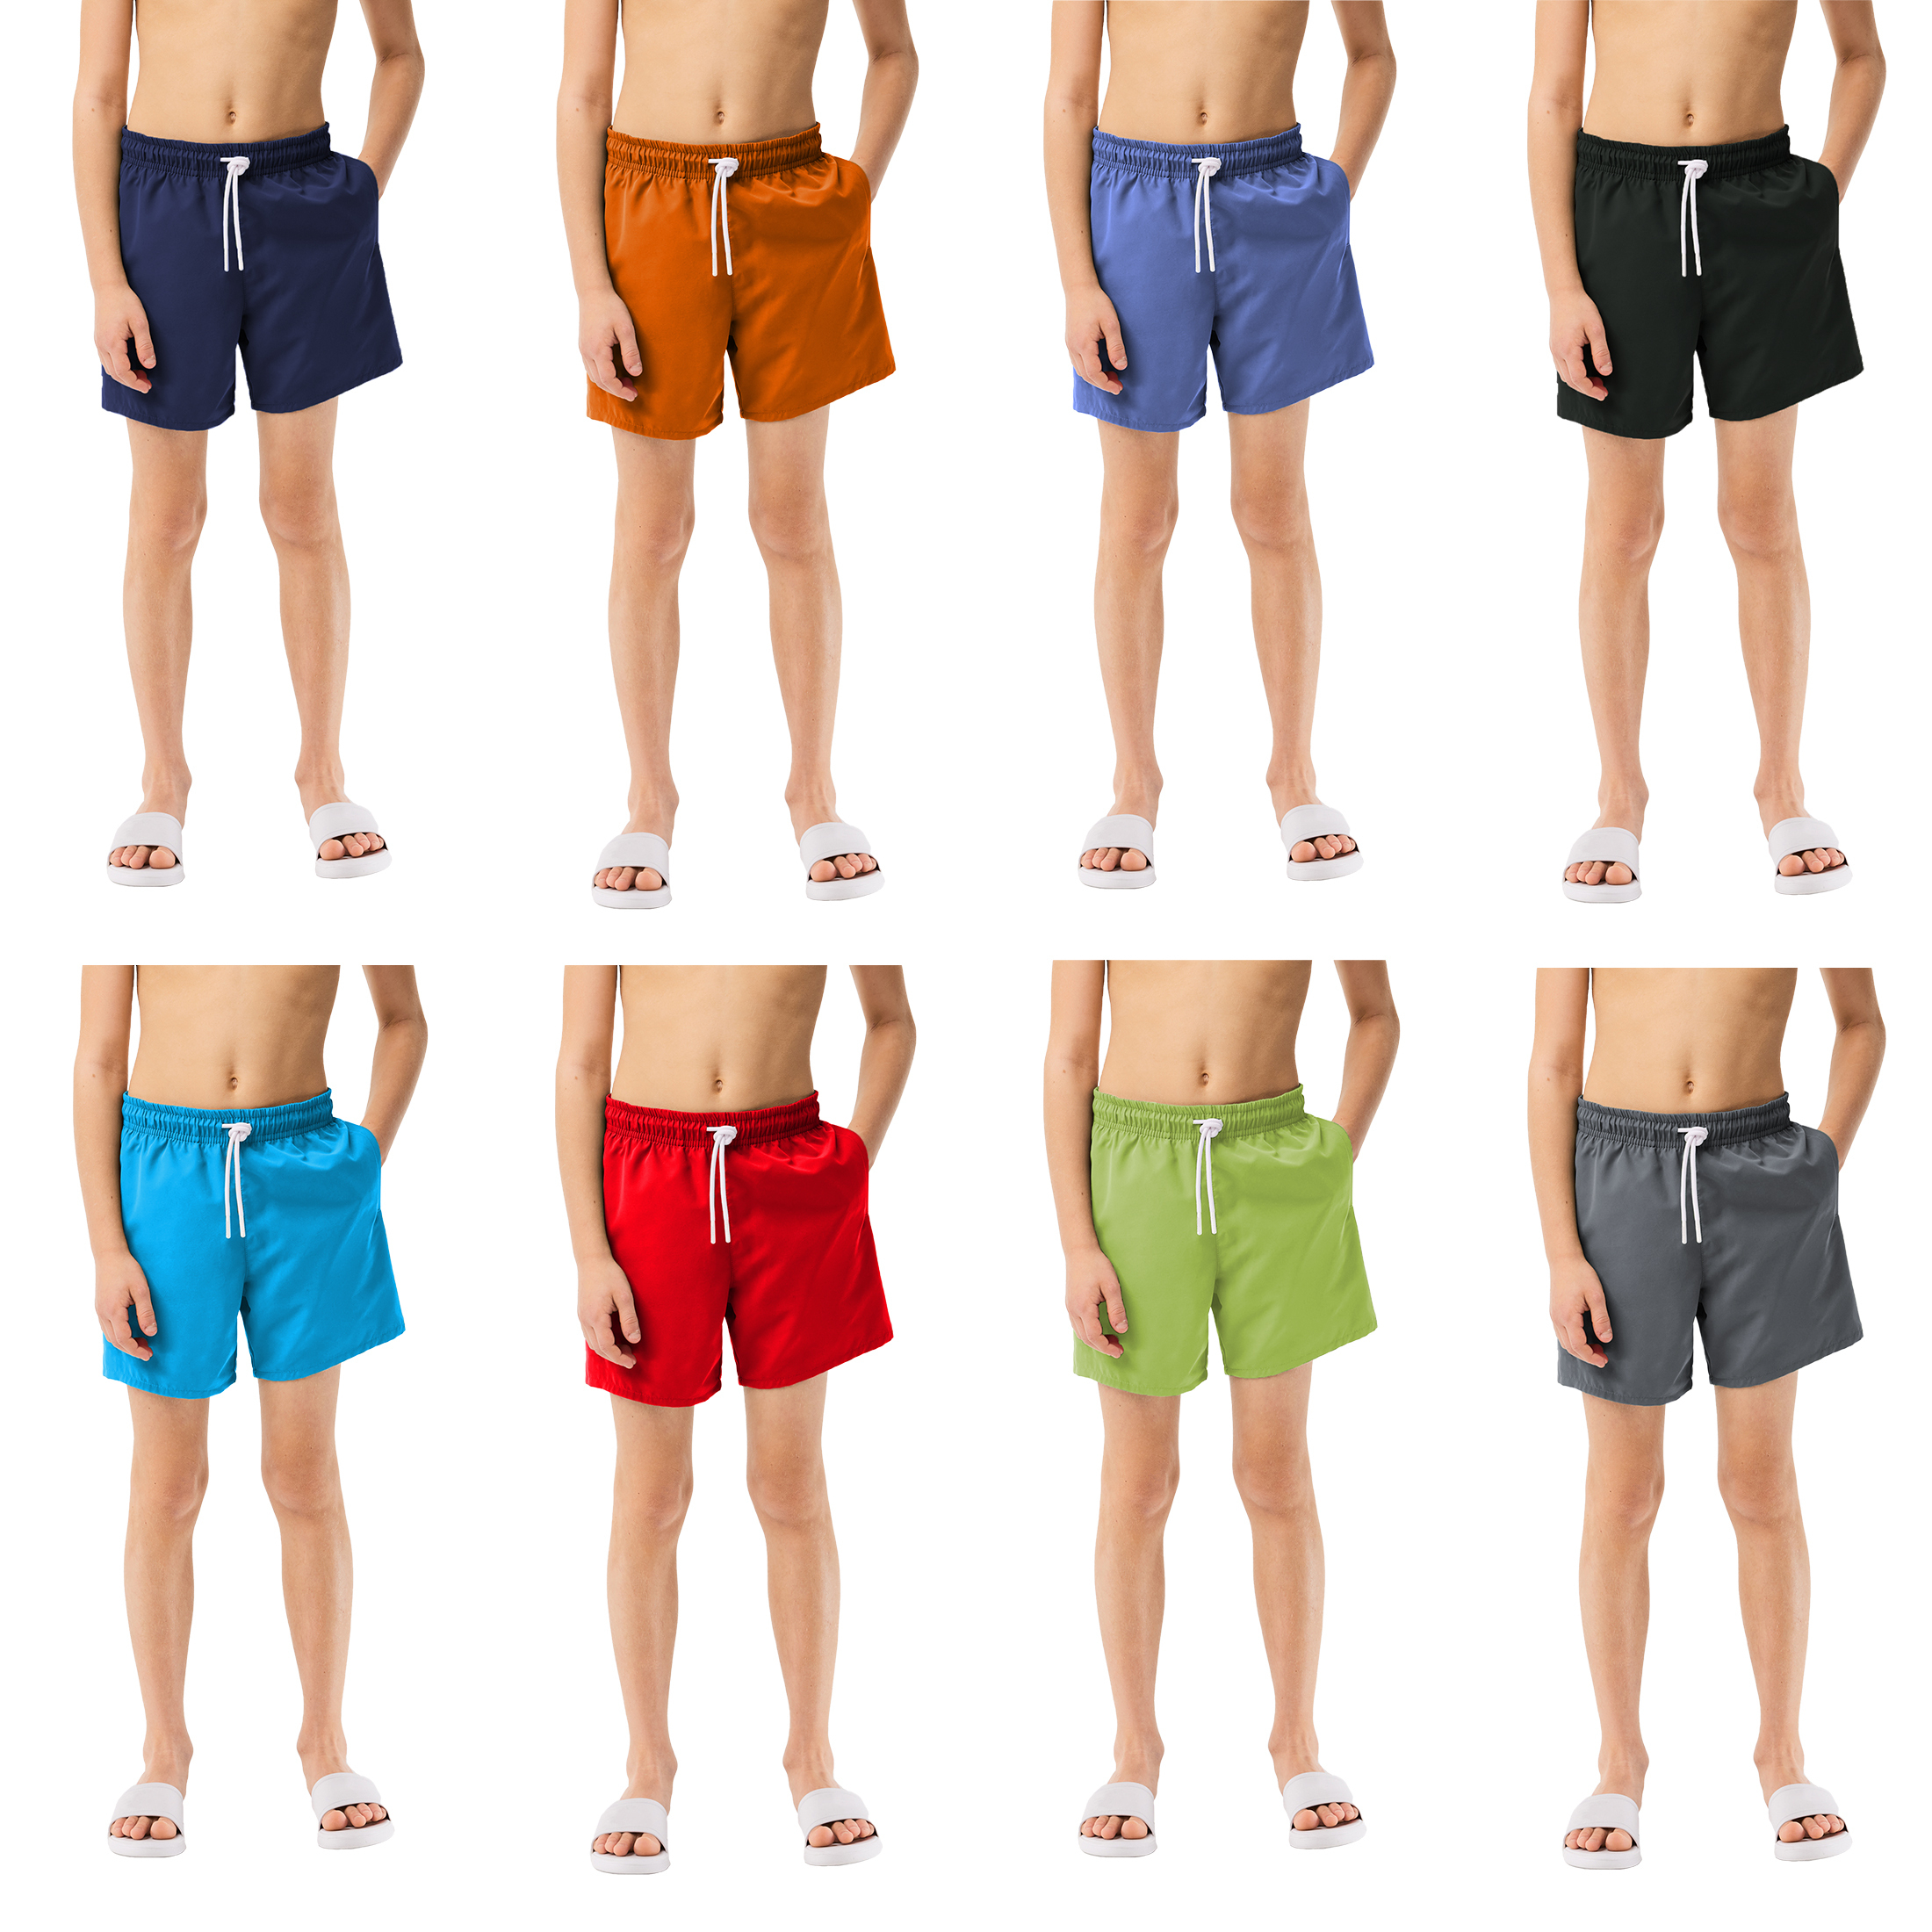 3-Pack Boy's Beach Swim Trunk Shorts Quick Dry UPF 50+ Little Boys Bathing Summer Swimsuit - S